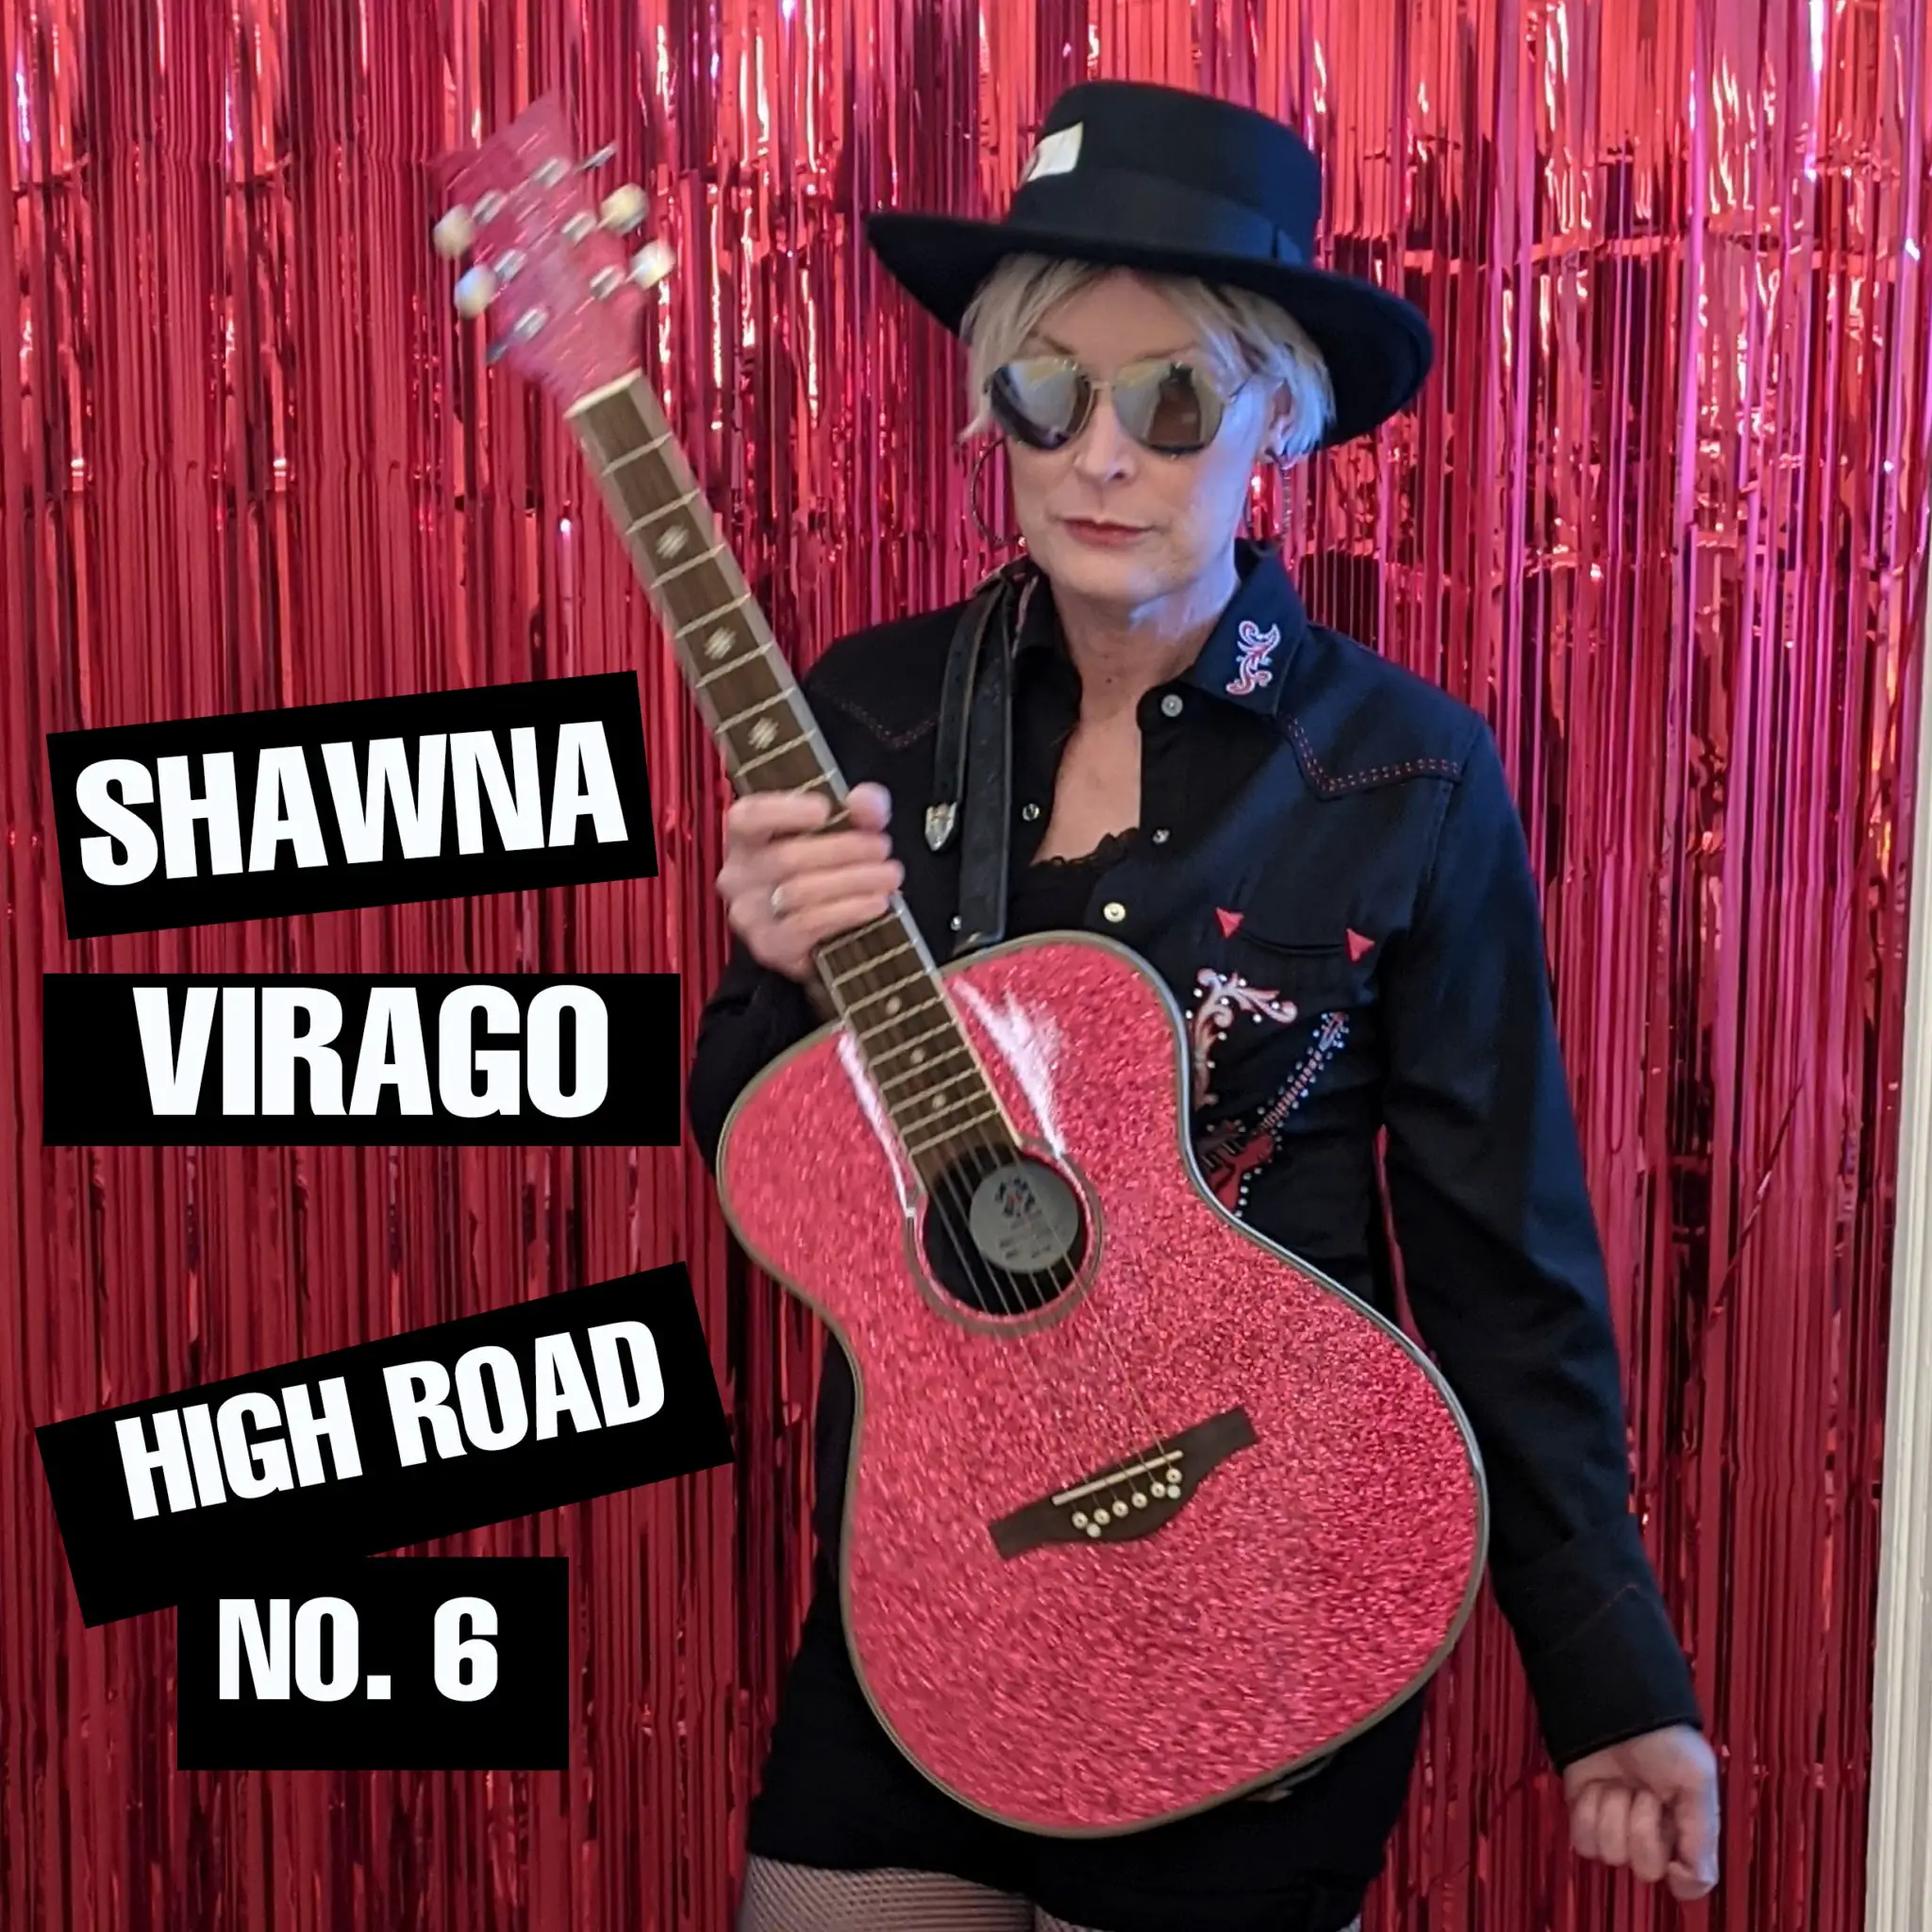 Shawna Virago - "High Road No. 6" Reaction | Opinions | LIVING LIFE FEARLESS